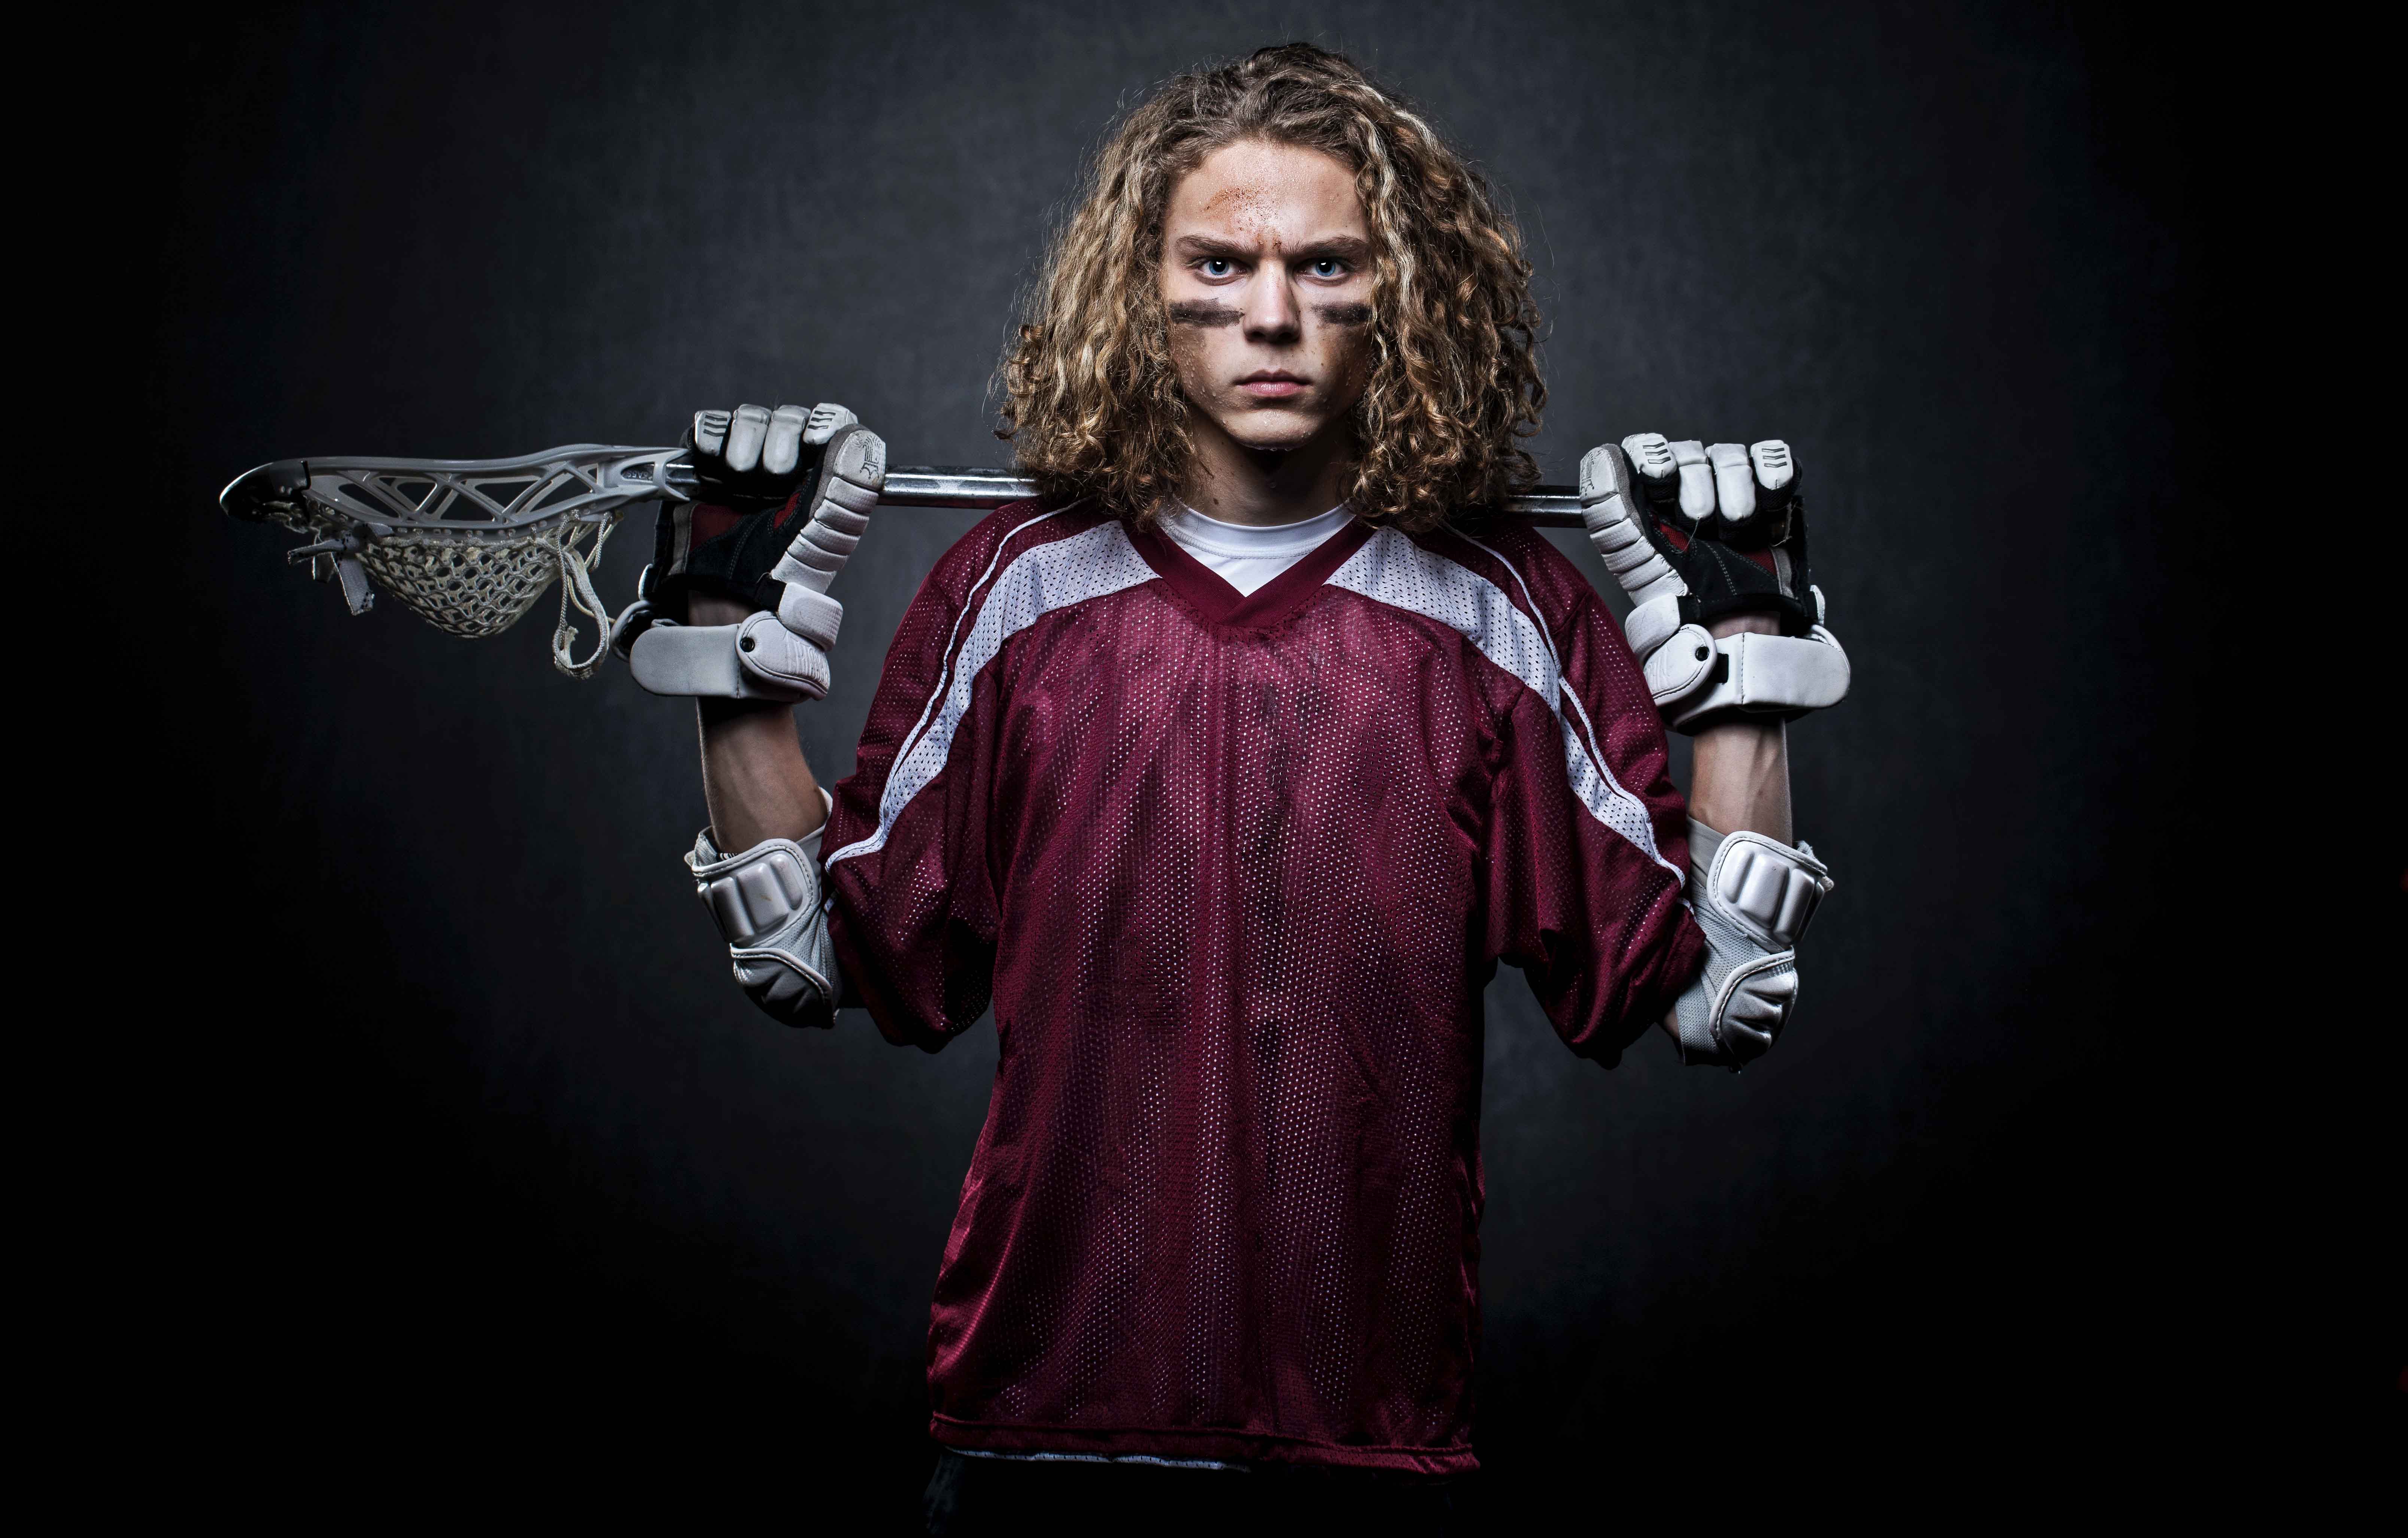 Sports Photoshoot - Athlete Portrait